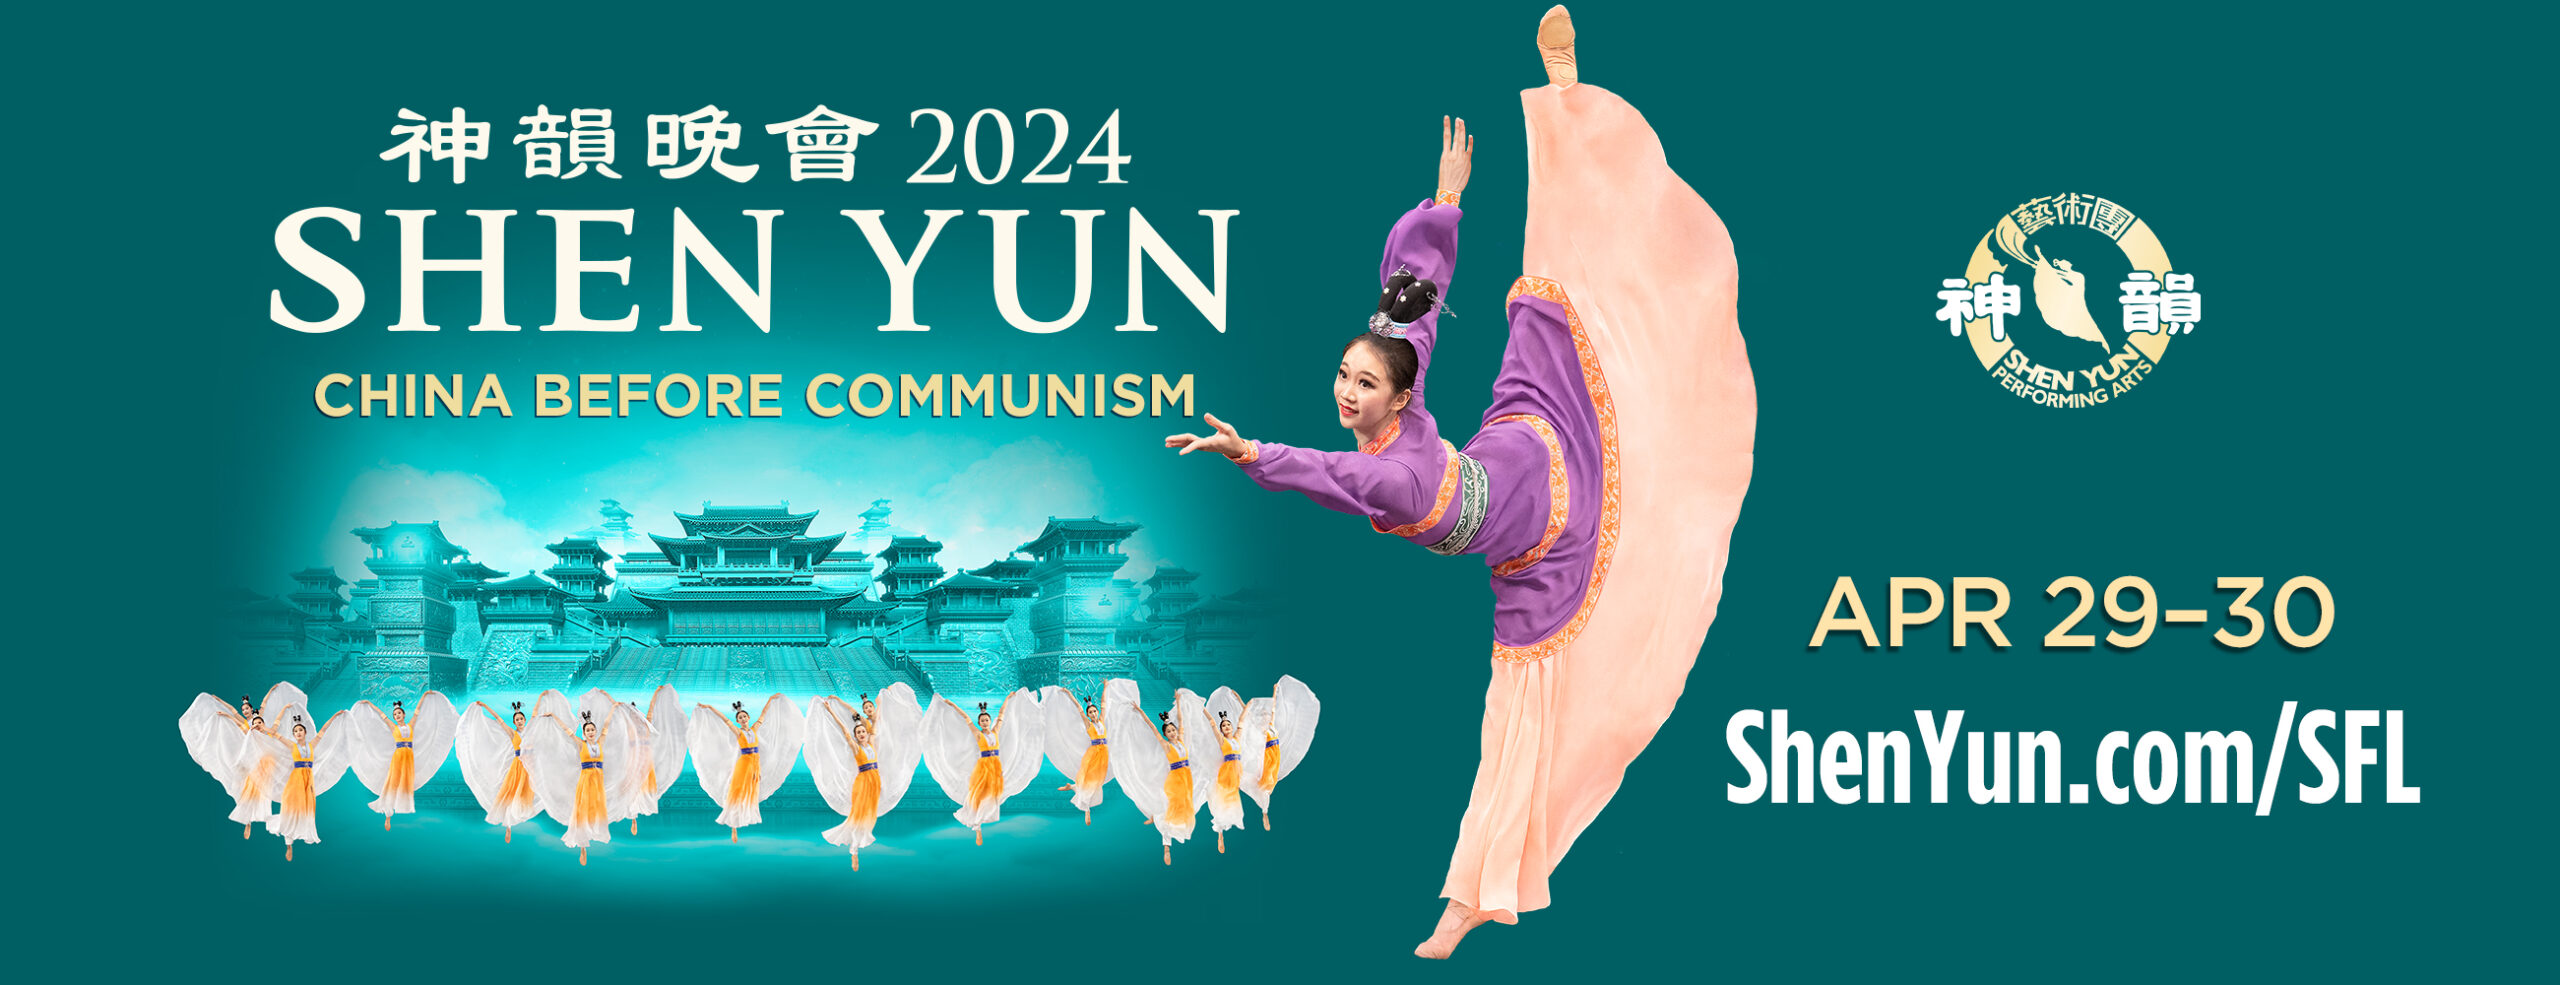 <center>Falun Dafa Association of Florida </br> Presents </br> Shen Yun 2024 - China Before Communism </center>